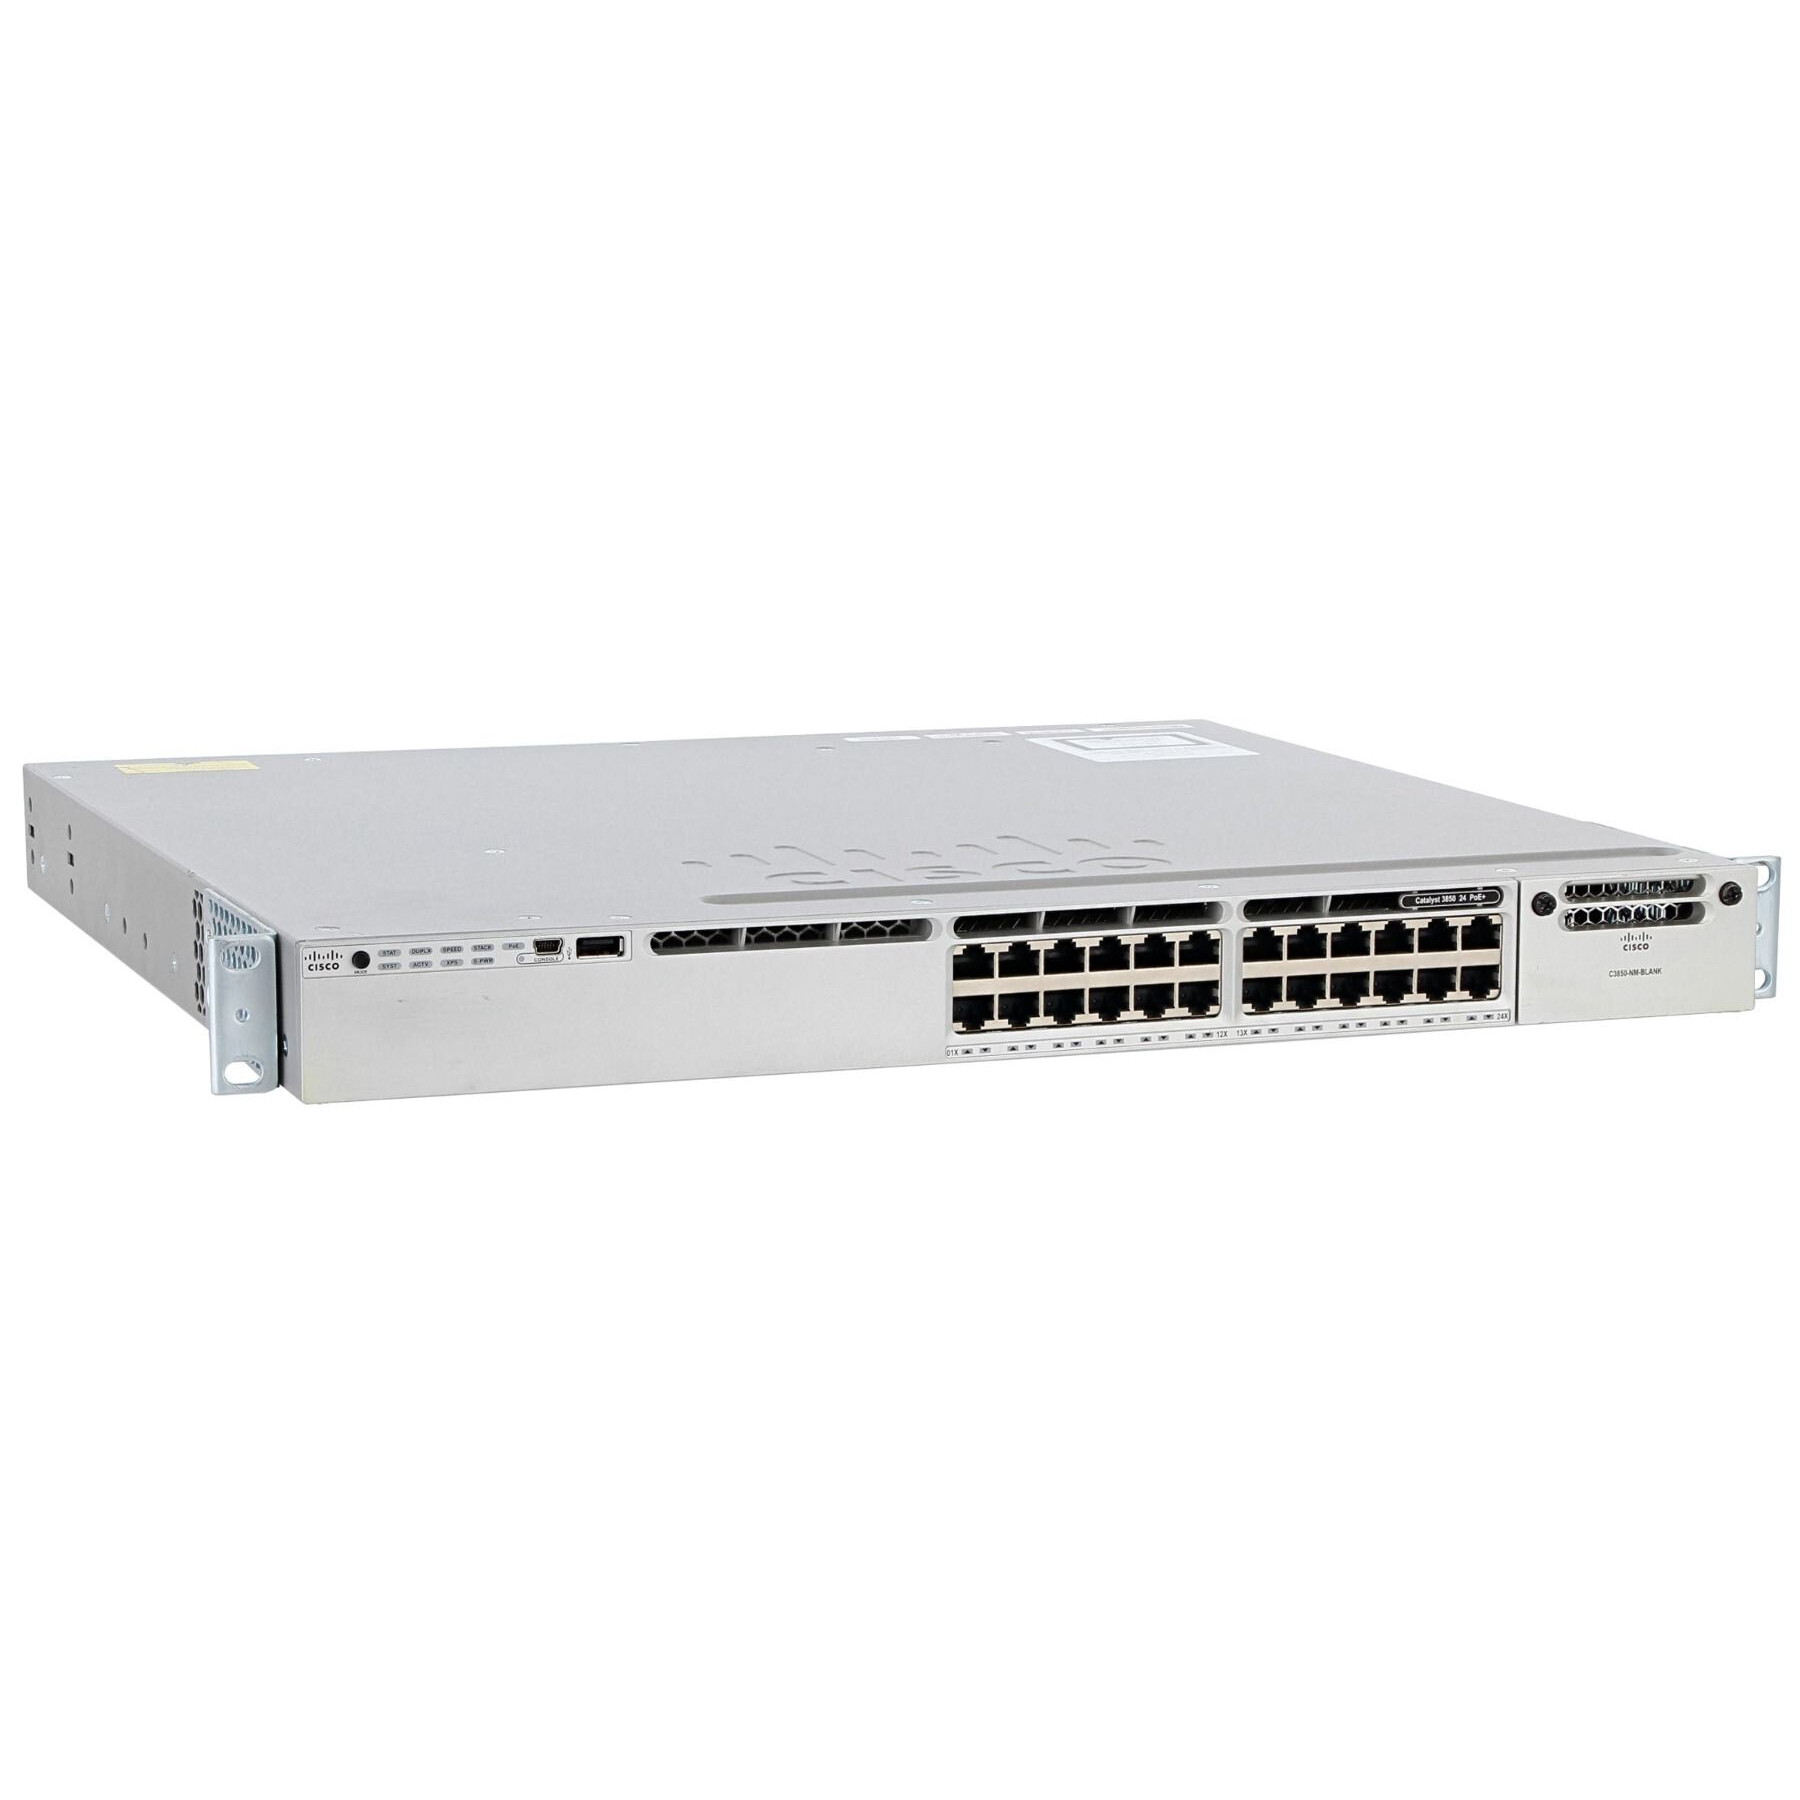 Switch Cisco Catalyst WS-C3850-24P-L - 24 ports